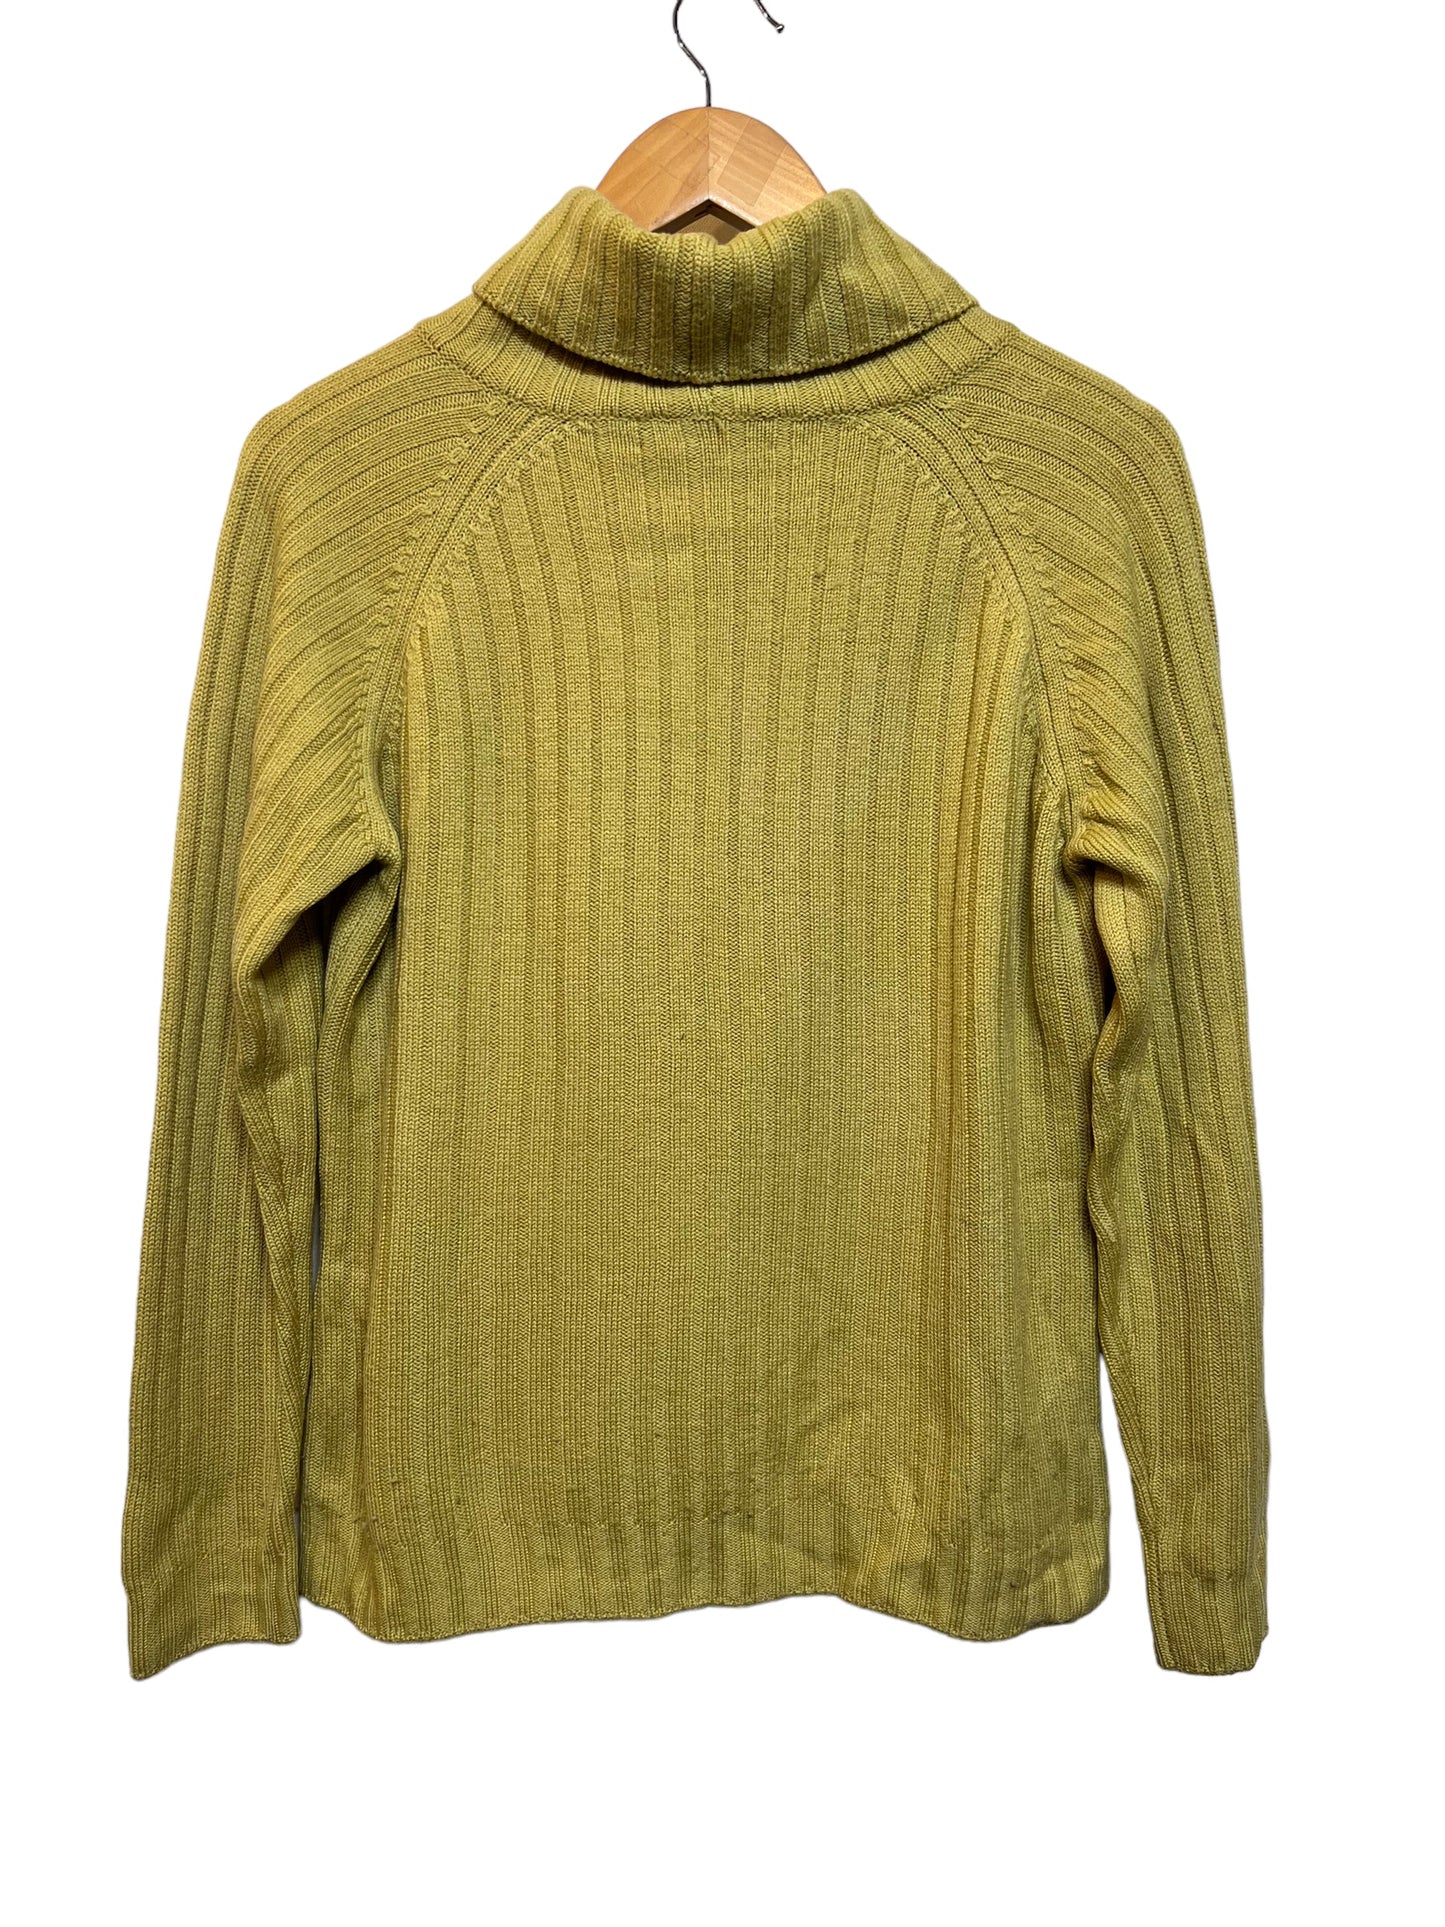 Artigiano Green Knitted Turtle Neck Sweater (Size XL)